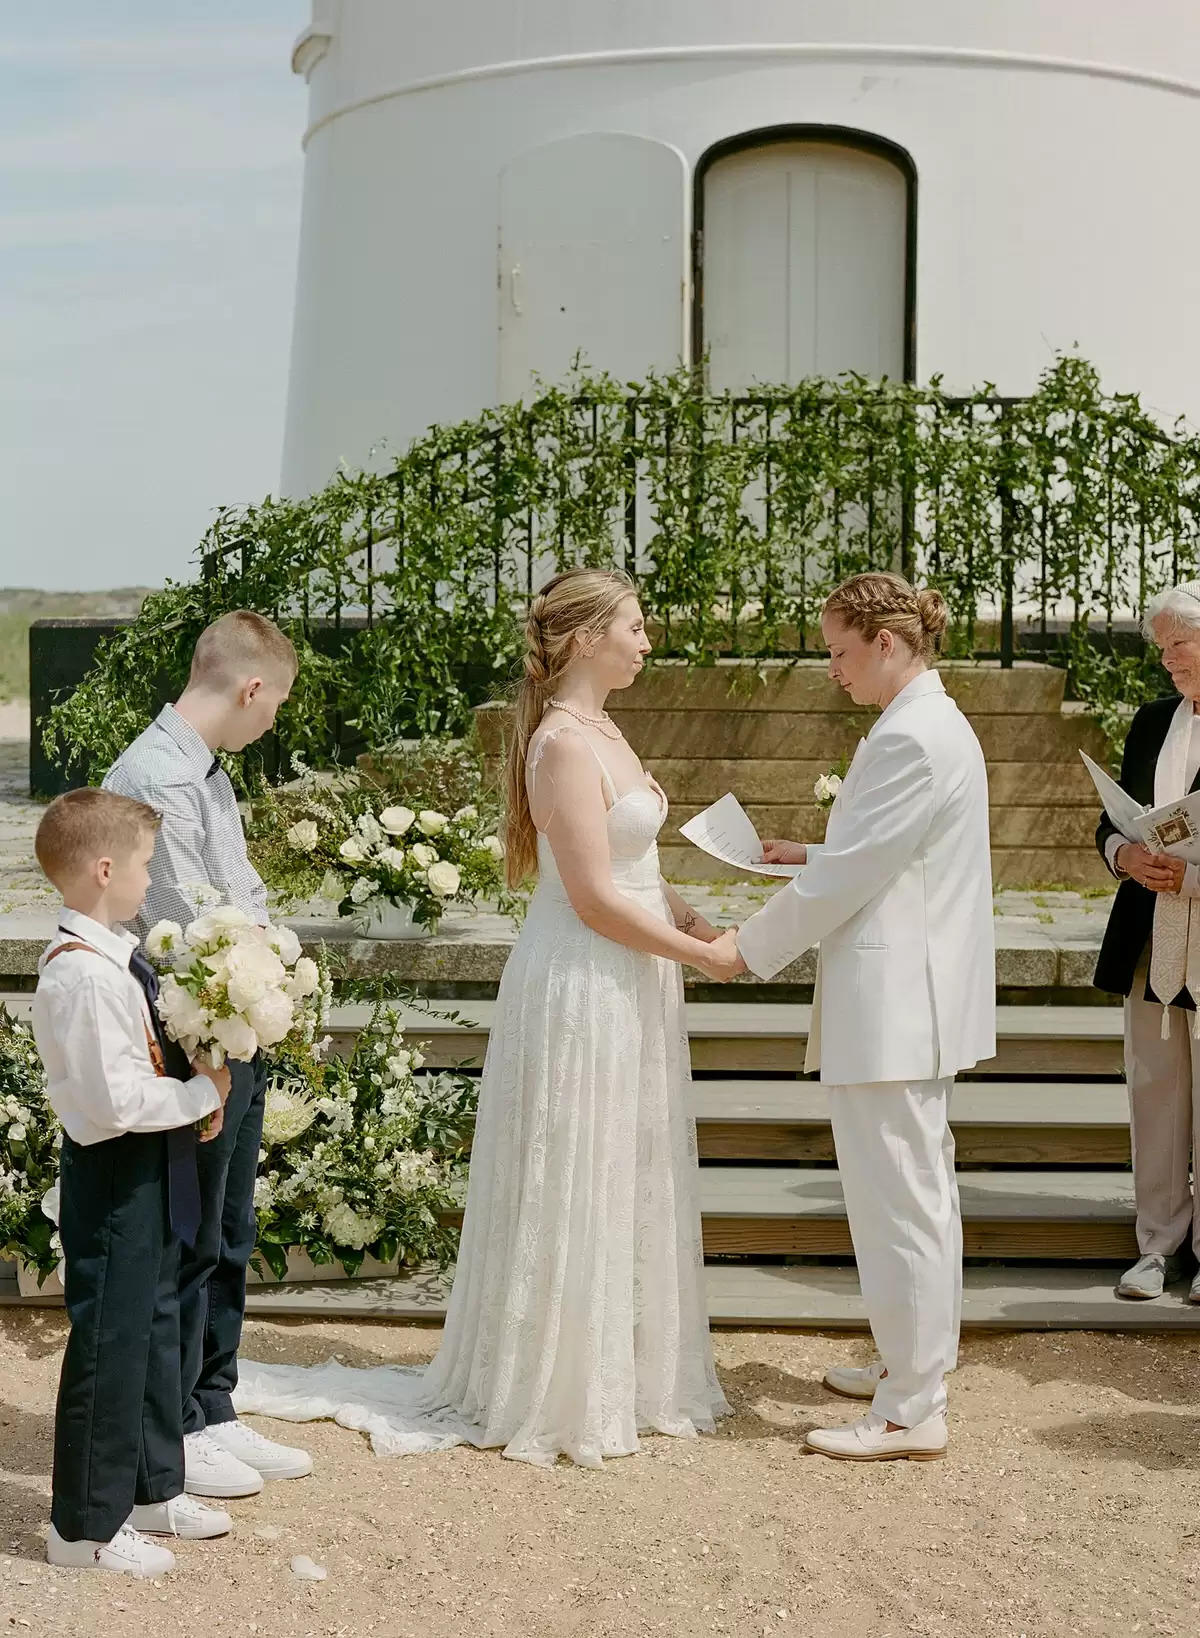 Easy Seashore Wedding ceremony for Two Brides ⋆ Ruffled